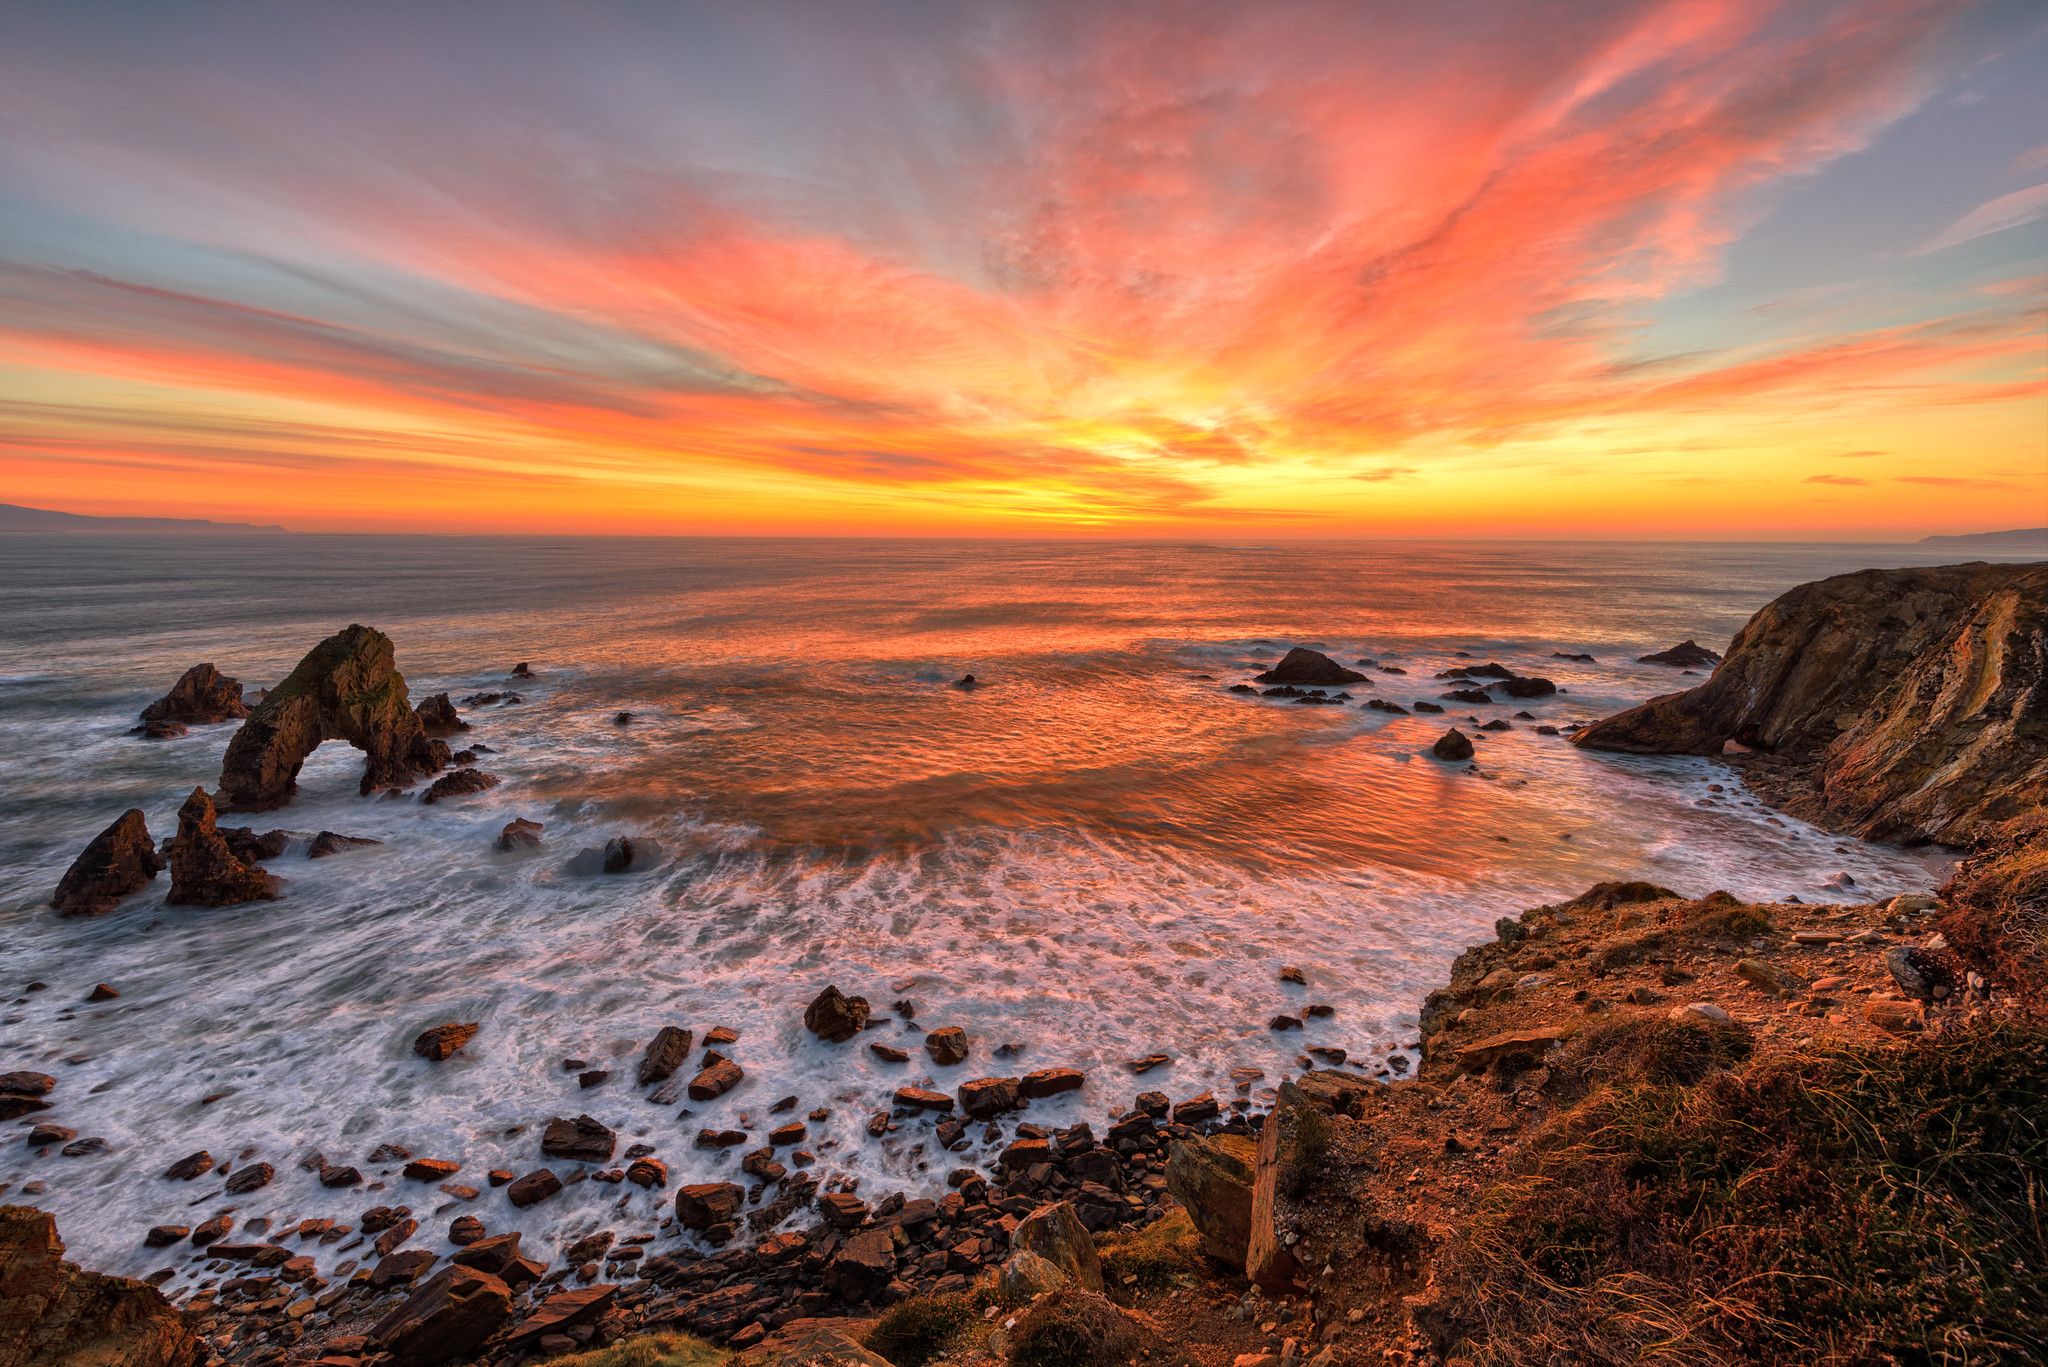 Sunset over Rocky Coastline by Gareth Wray